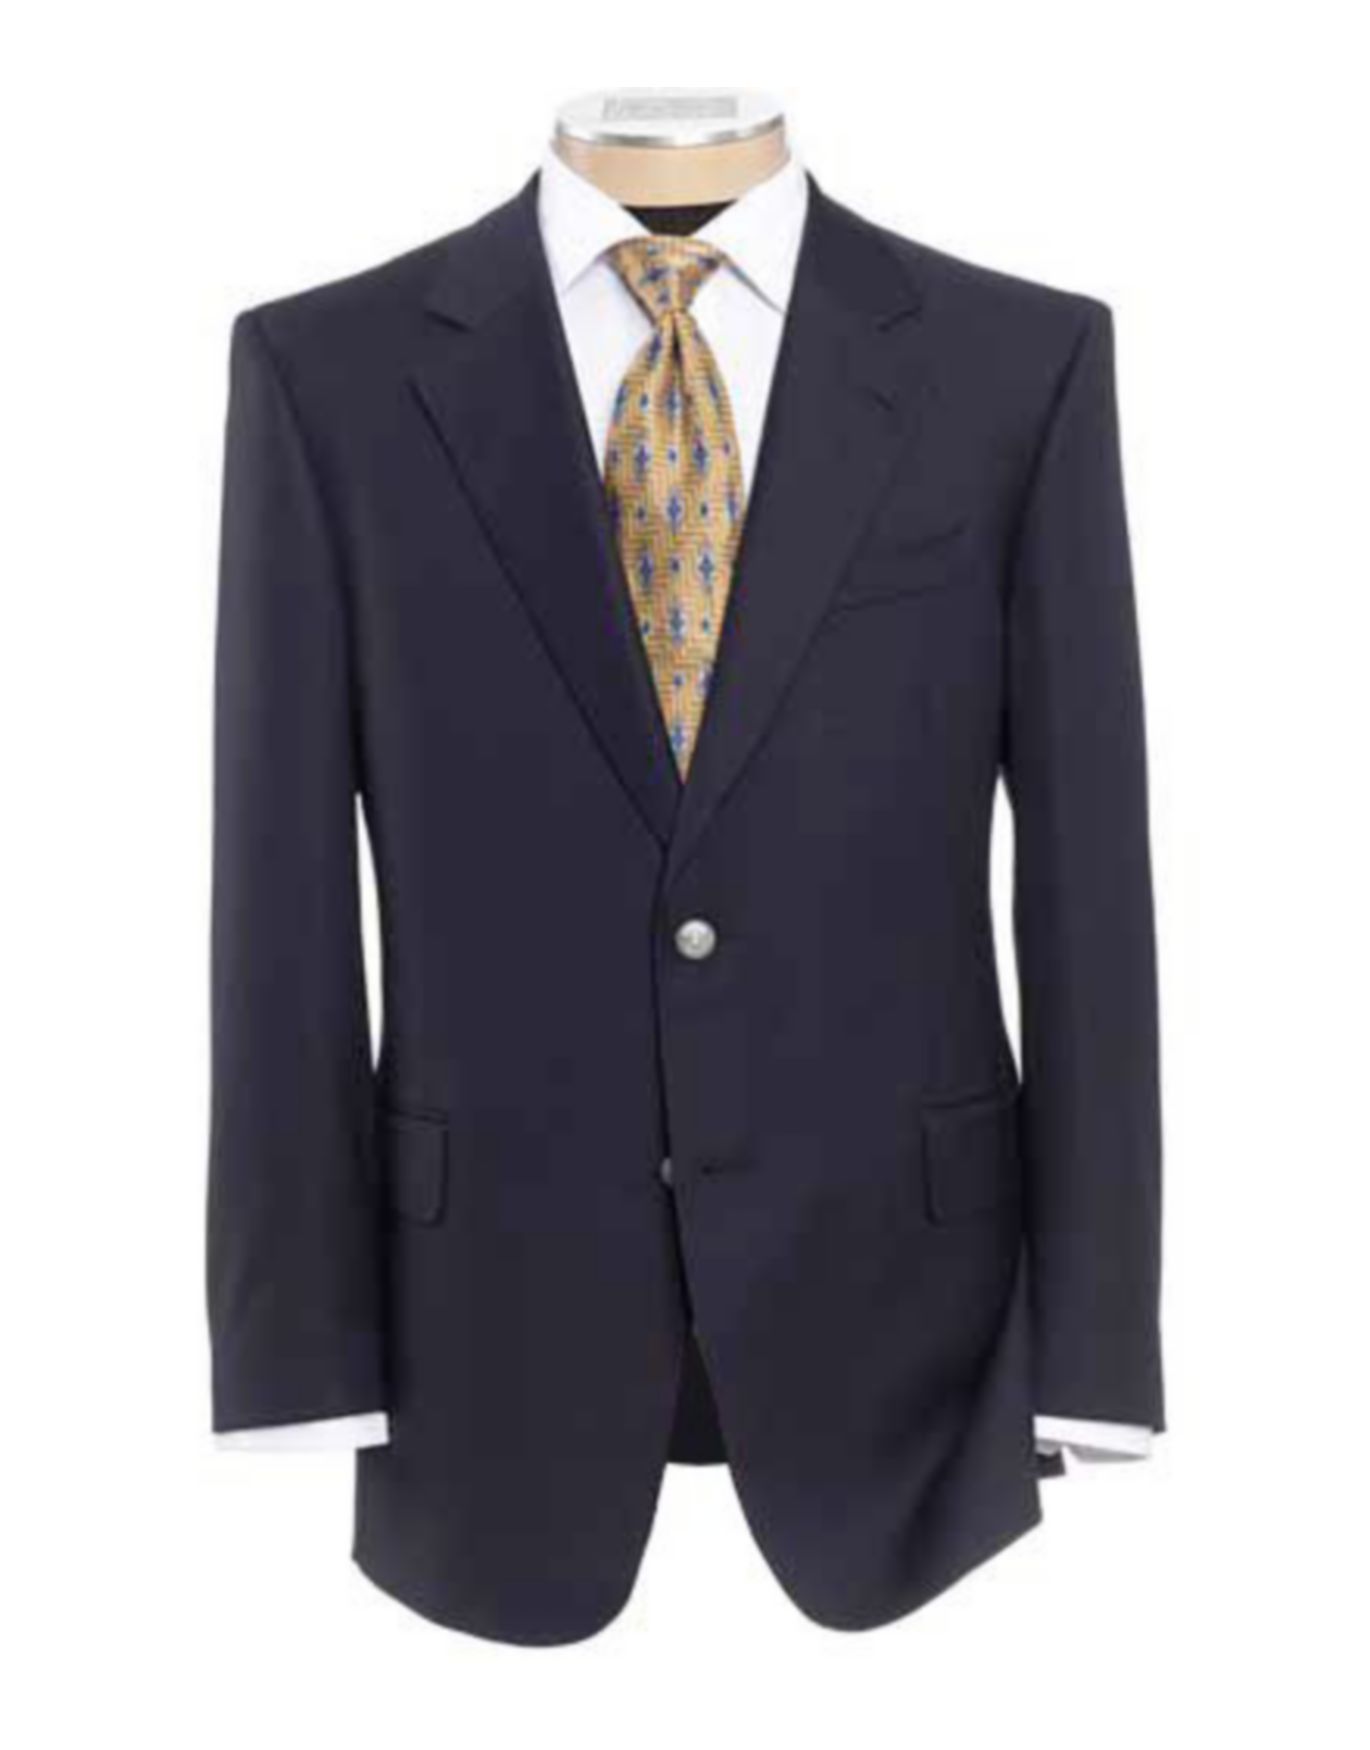 Sportcoats & Blazers for Men | Shop Sport Jackets | JoS. A. Bank